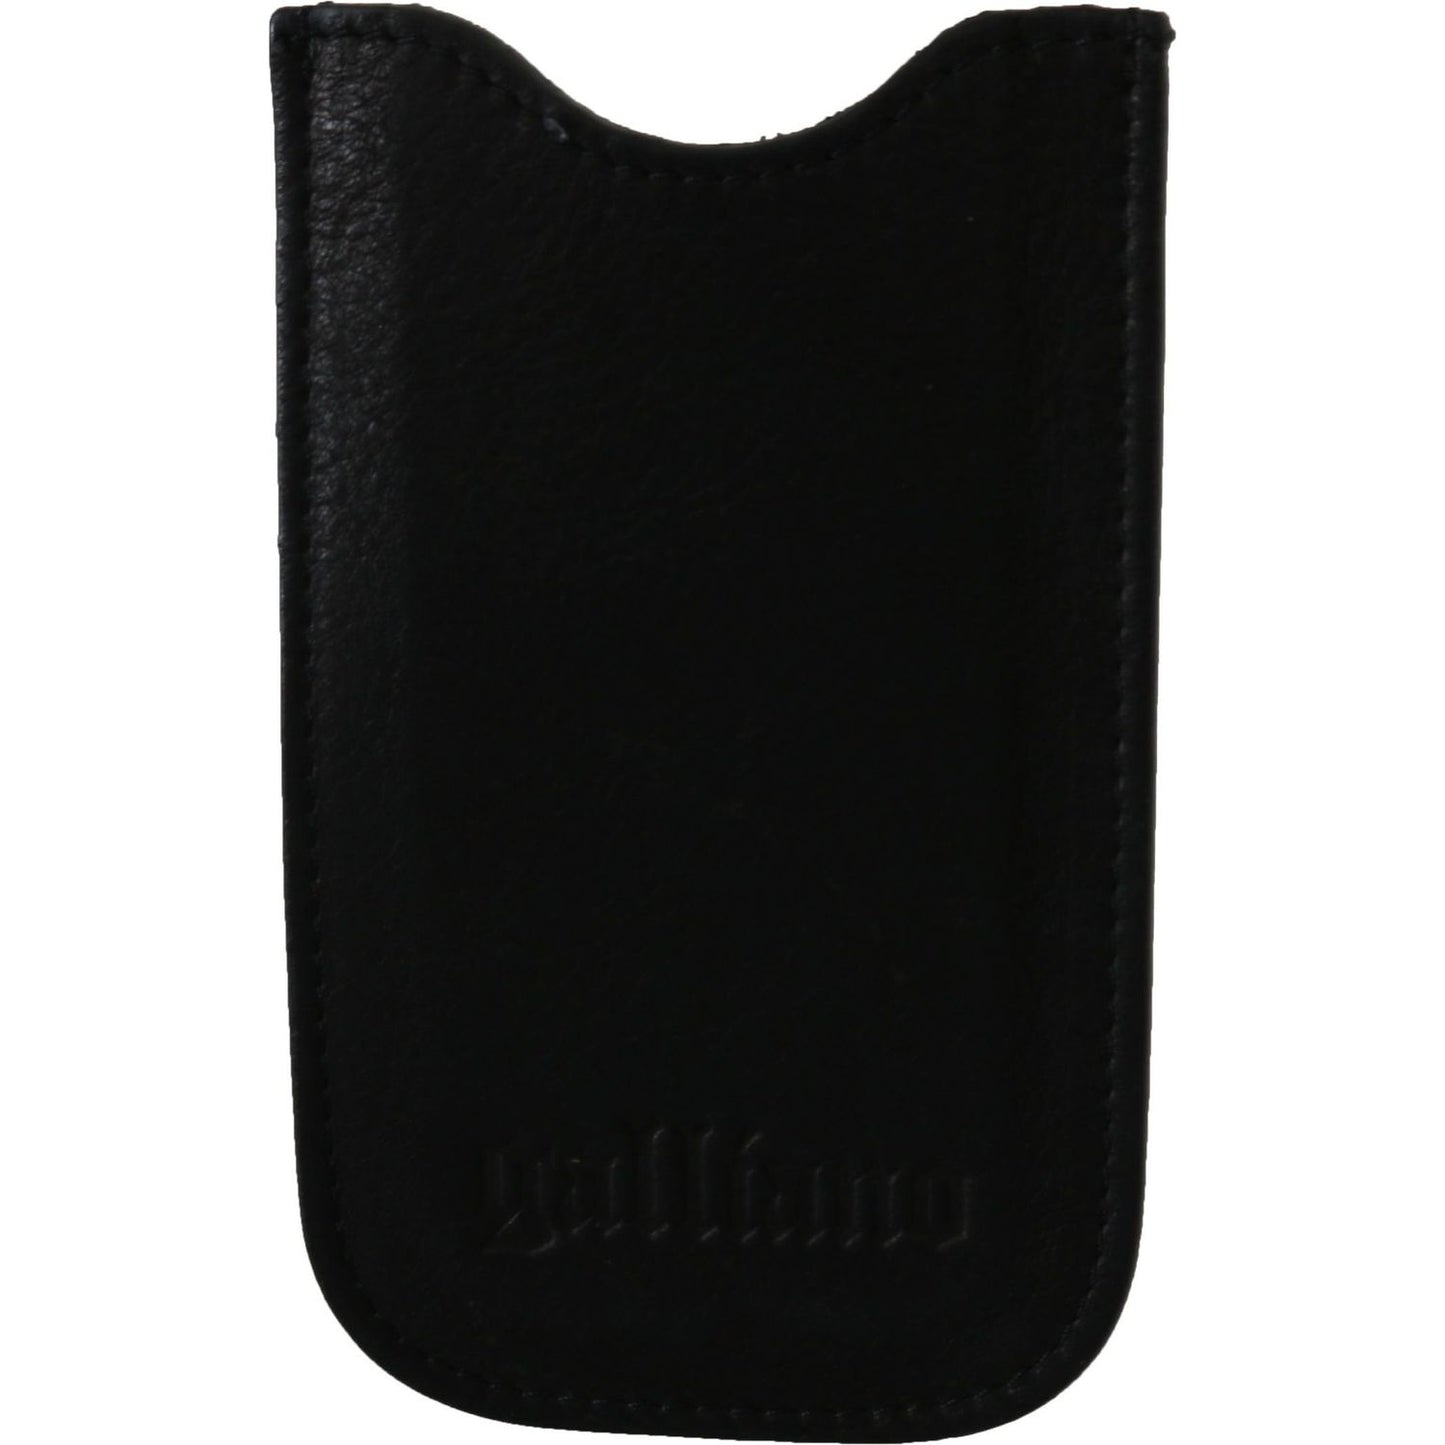 John Galliano Elegant Black Genuine Leather Men's Wallet Wallet black-leather-multifunctional-men-id-bill-card-holder-wallet IMG_1775-scaled-0a36bdc5-090.jpg